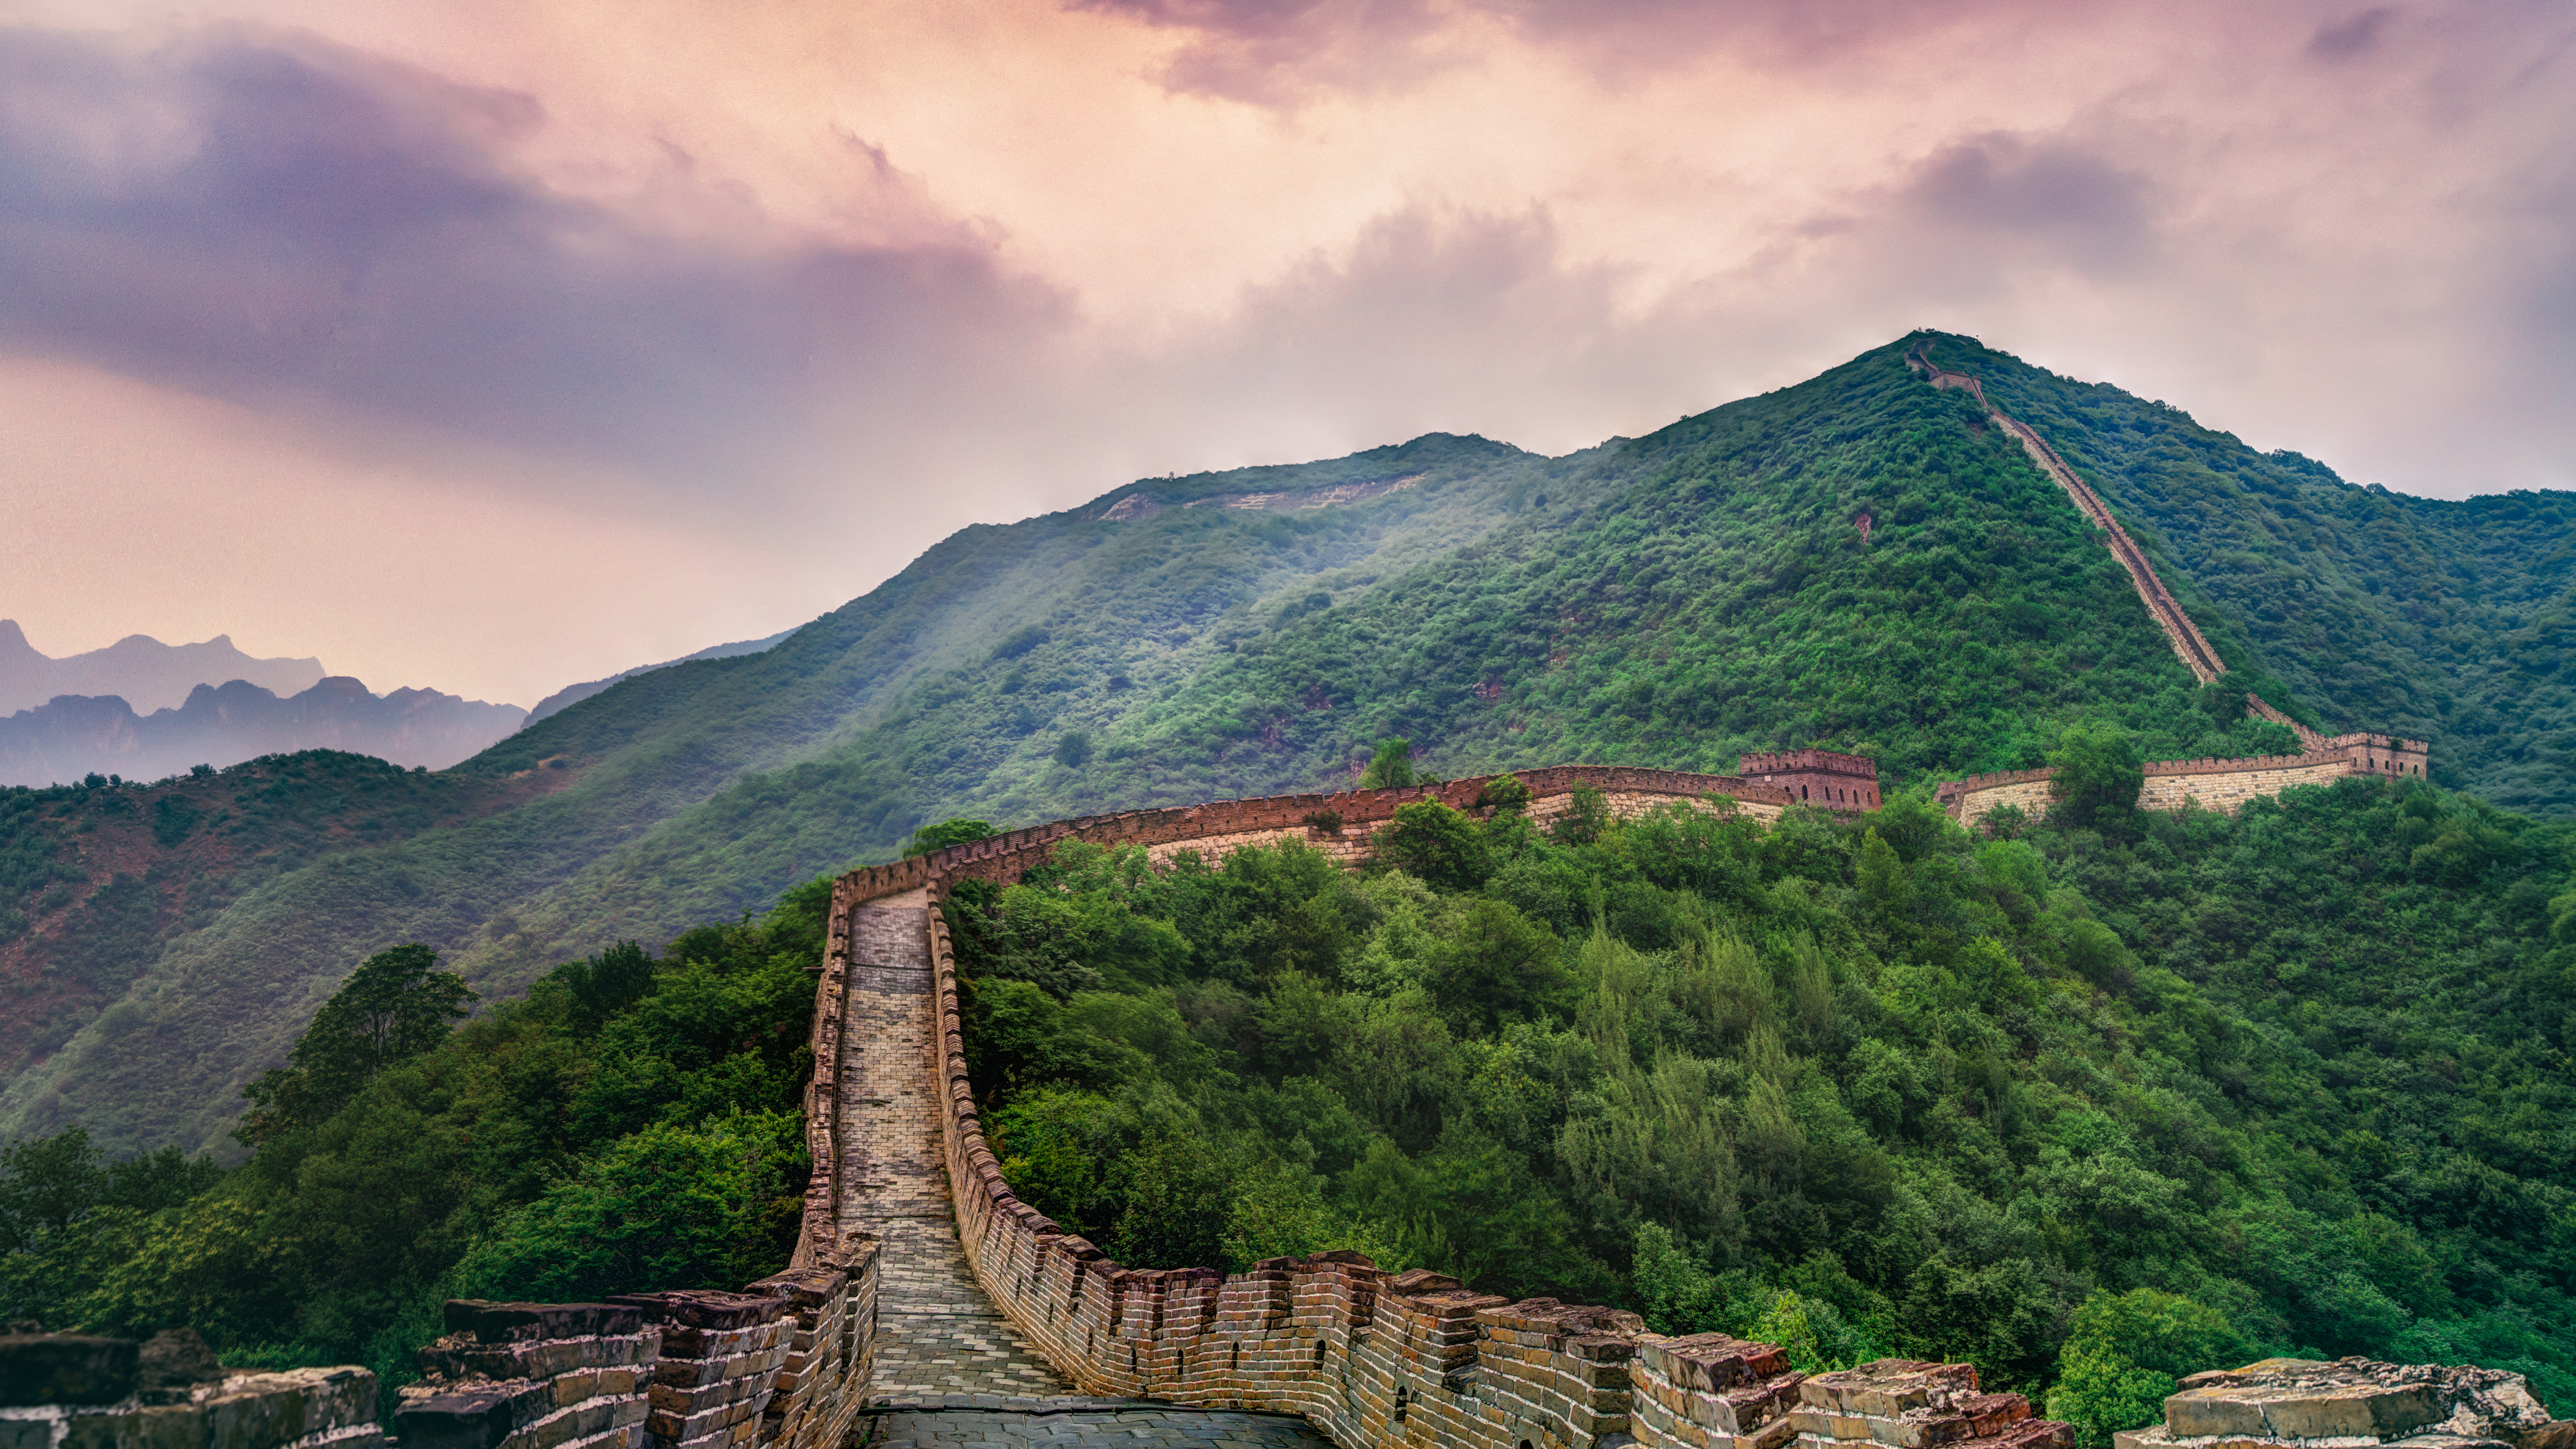 General 7680x4320 Trey Ratcliff photography China Great Wall of China